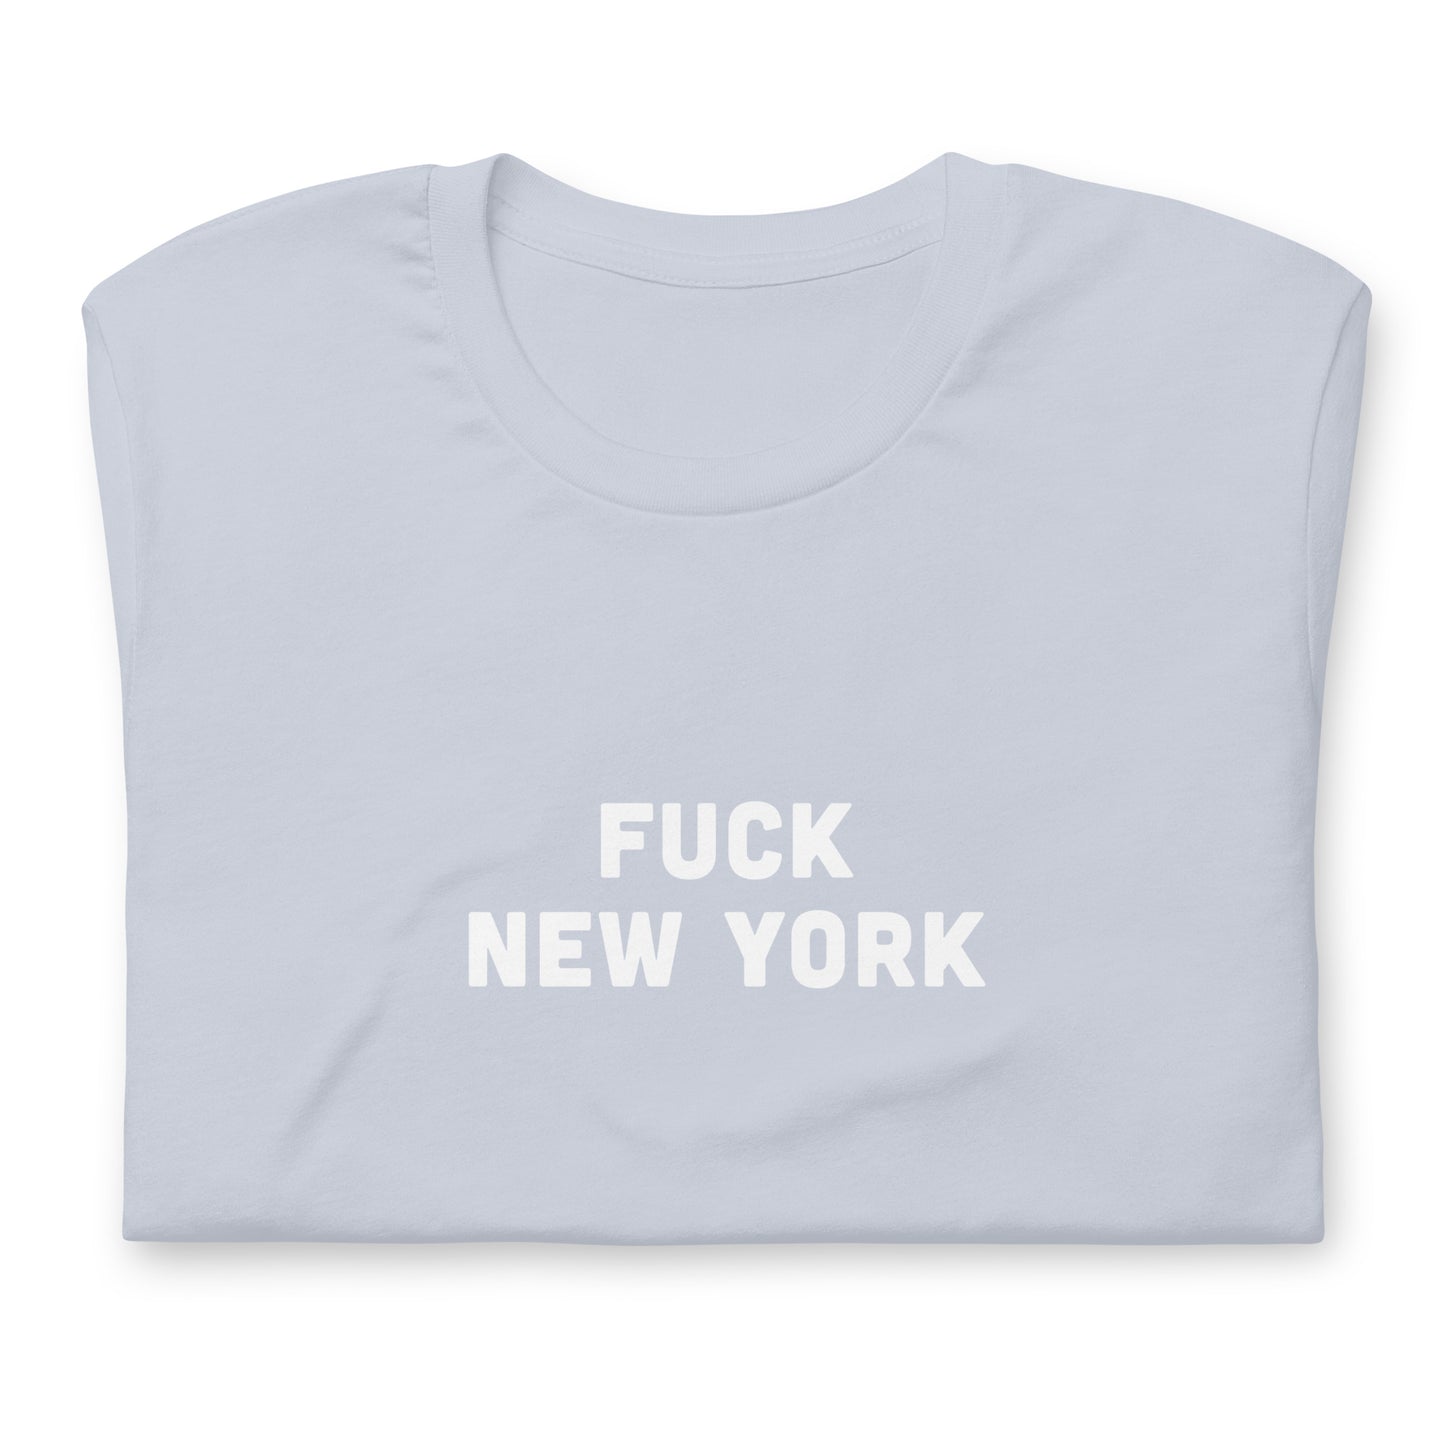 Fuck New York T-Shirt Size M Color Asphalt